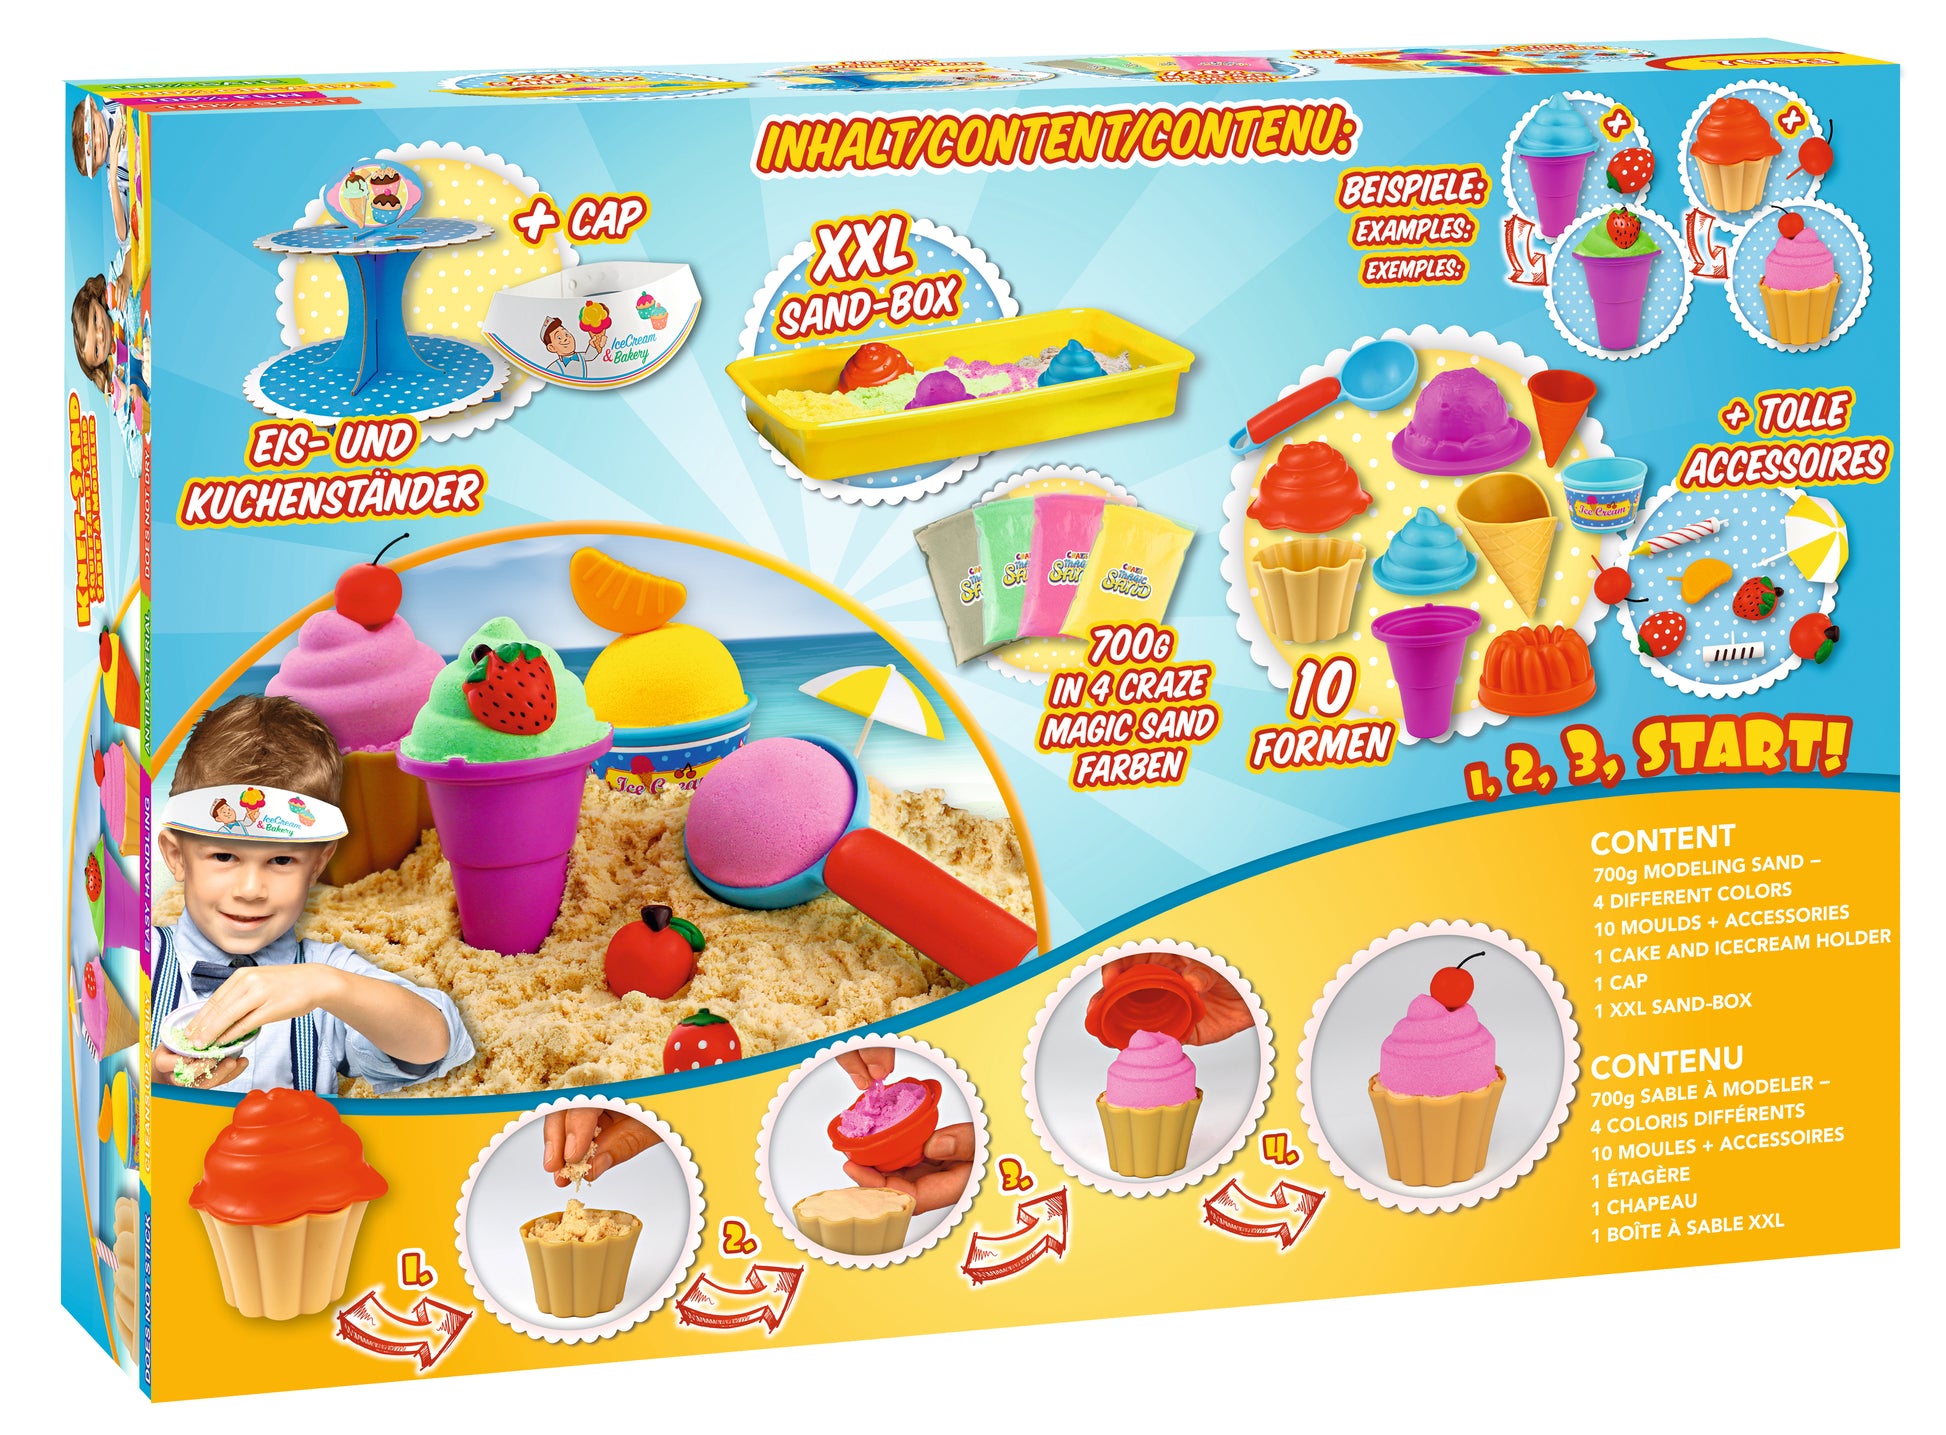 CRAZE MAGIC SAND ICE CREAM & BAKERY SET 700GR - Wild Willy - Toys Lebanon